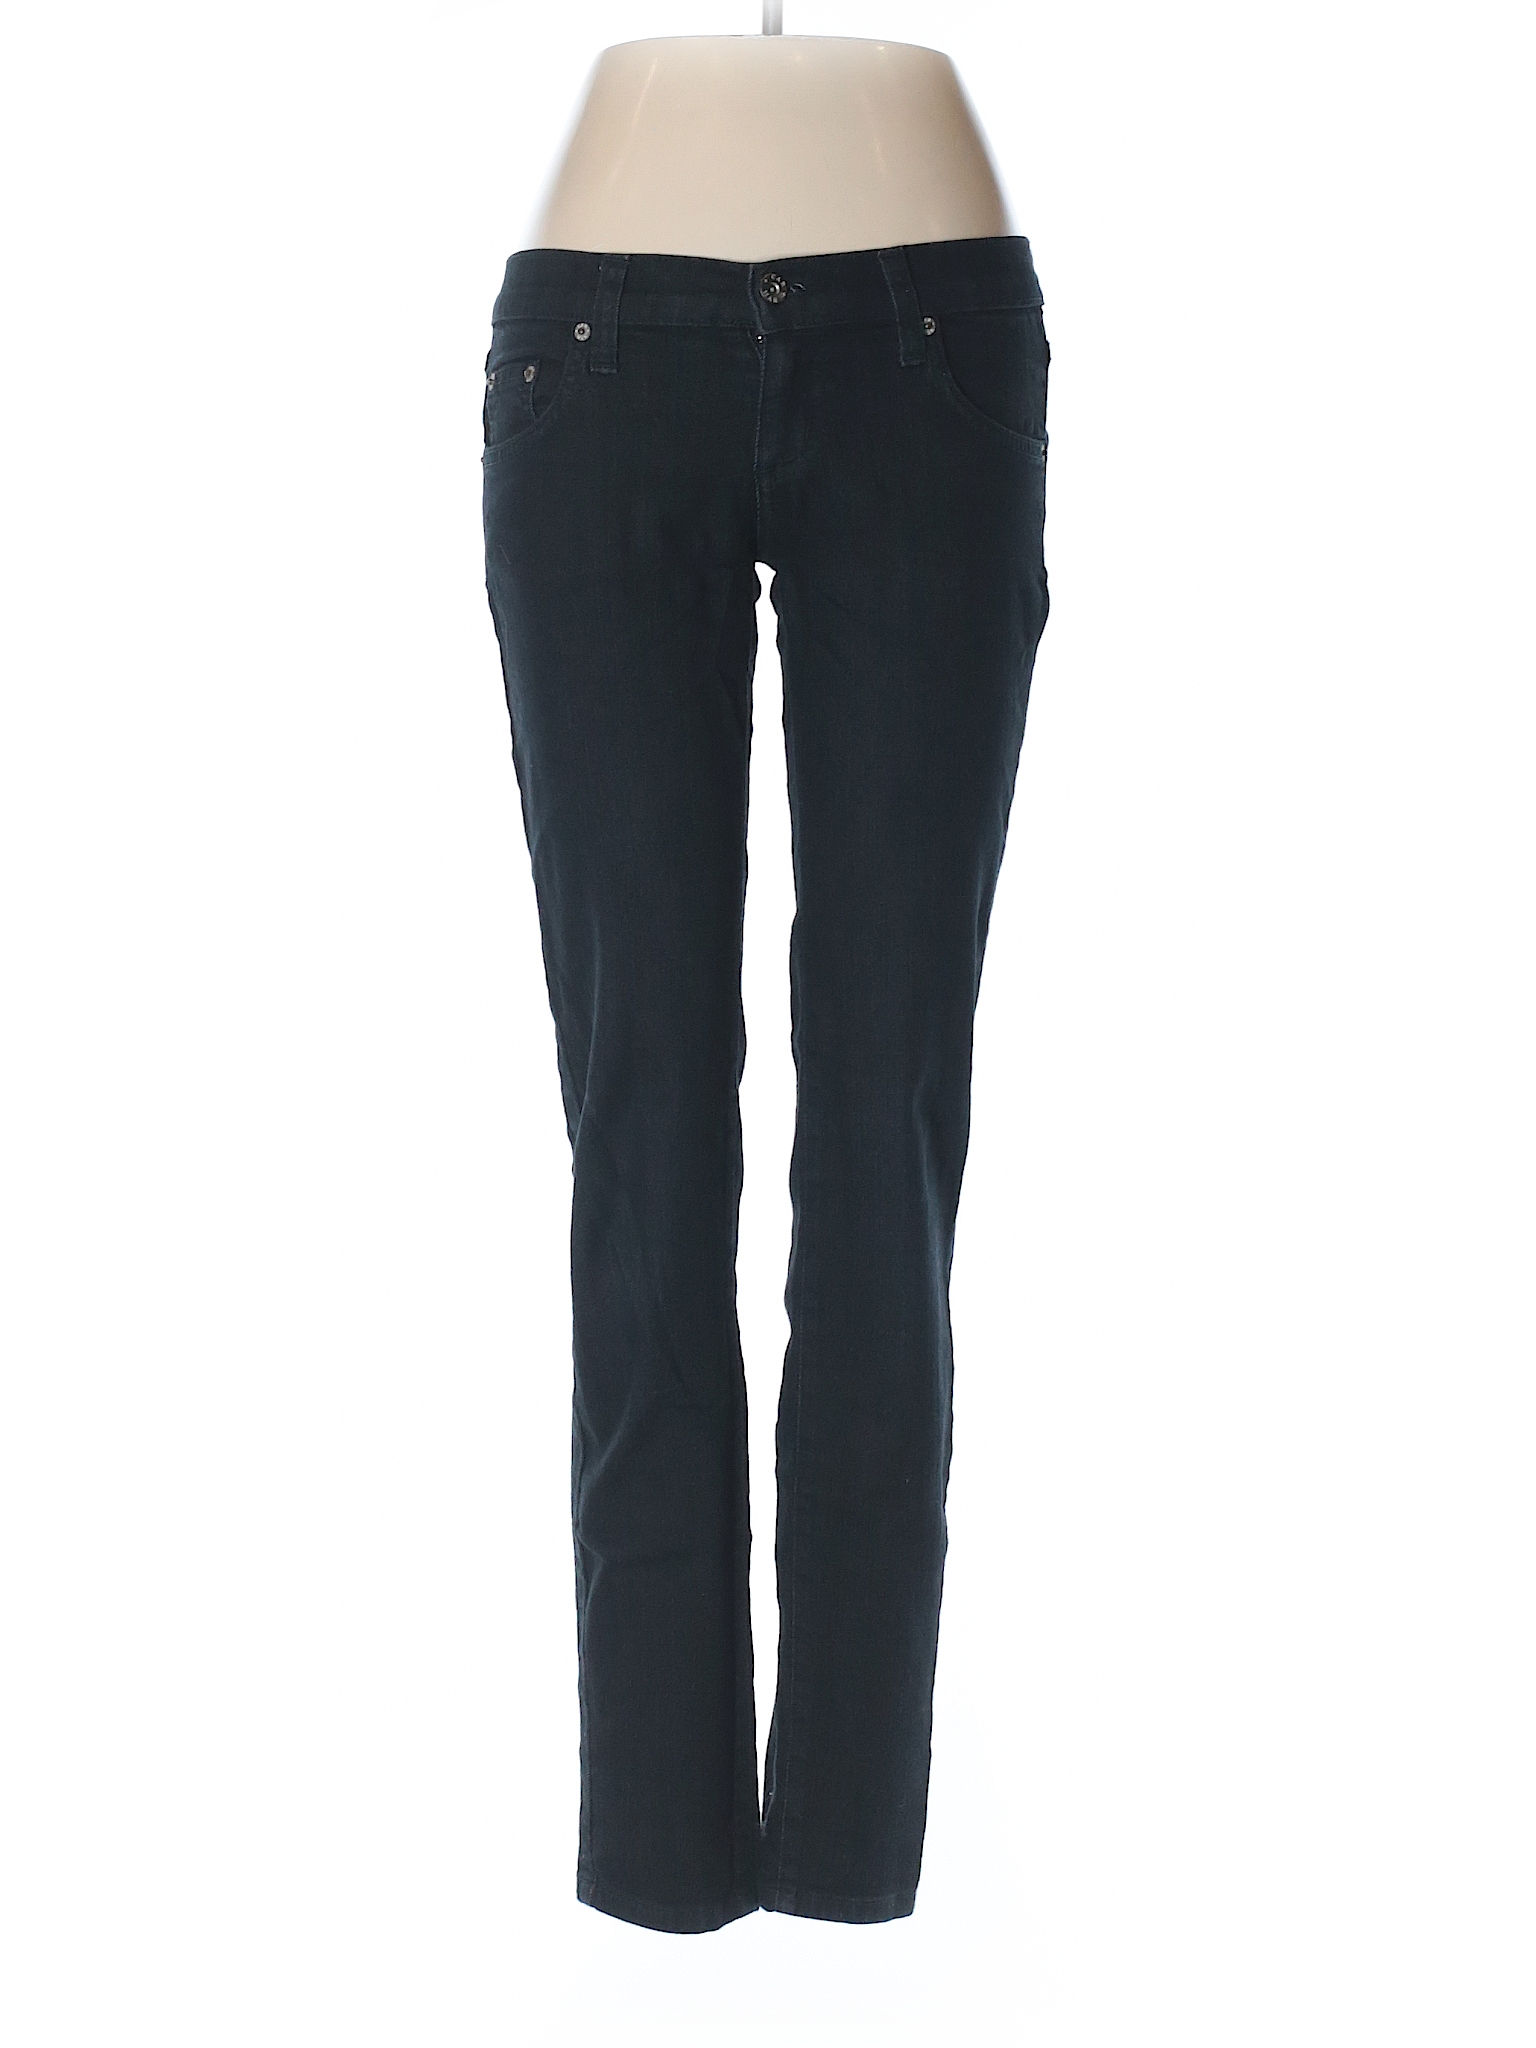 Carmar Solid Black Jeans 25 Waist - 91% off | thredUP